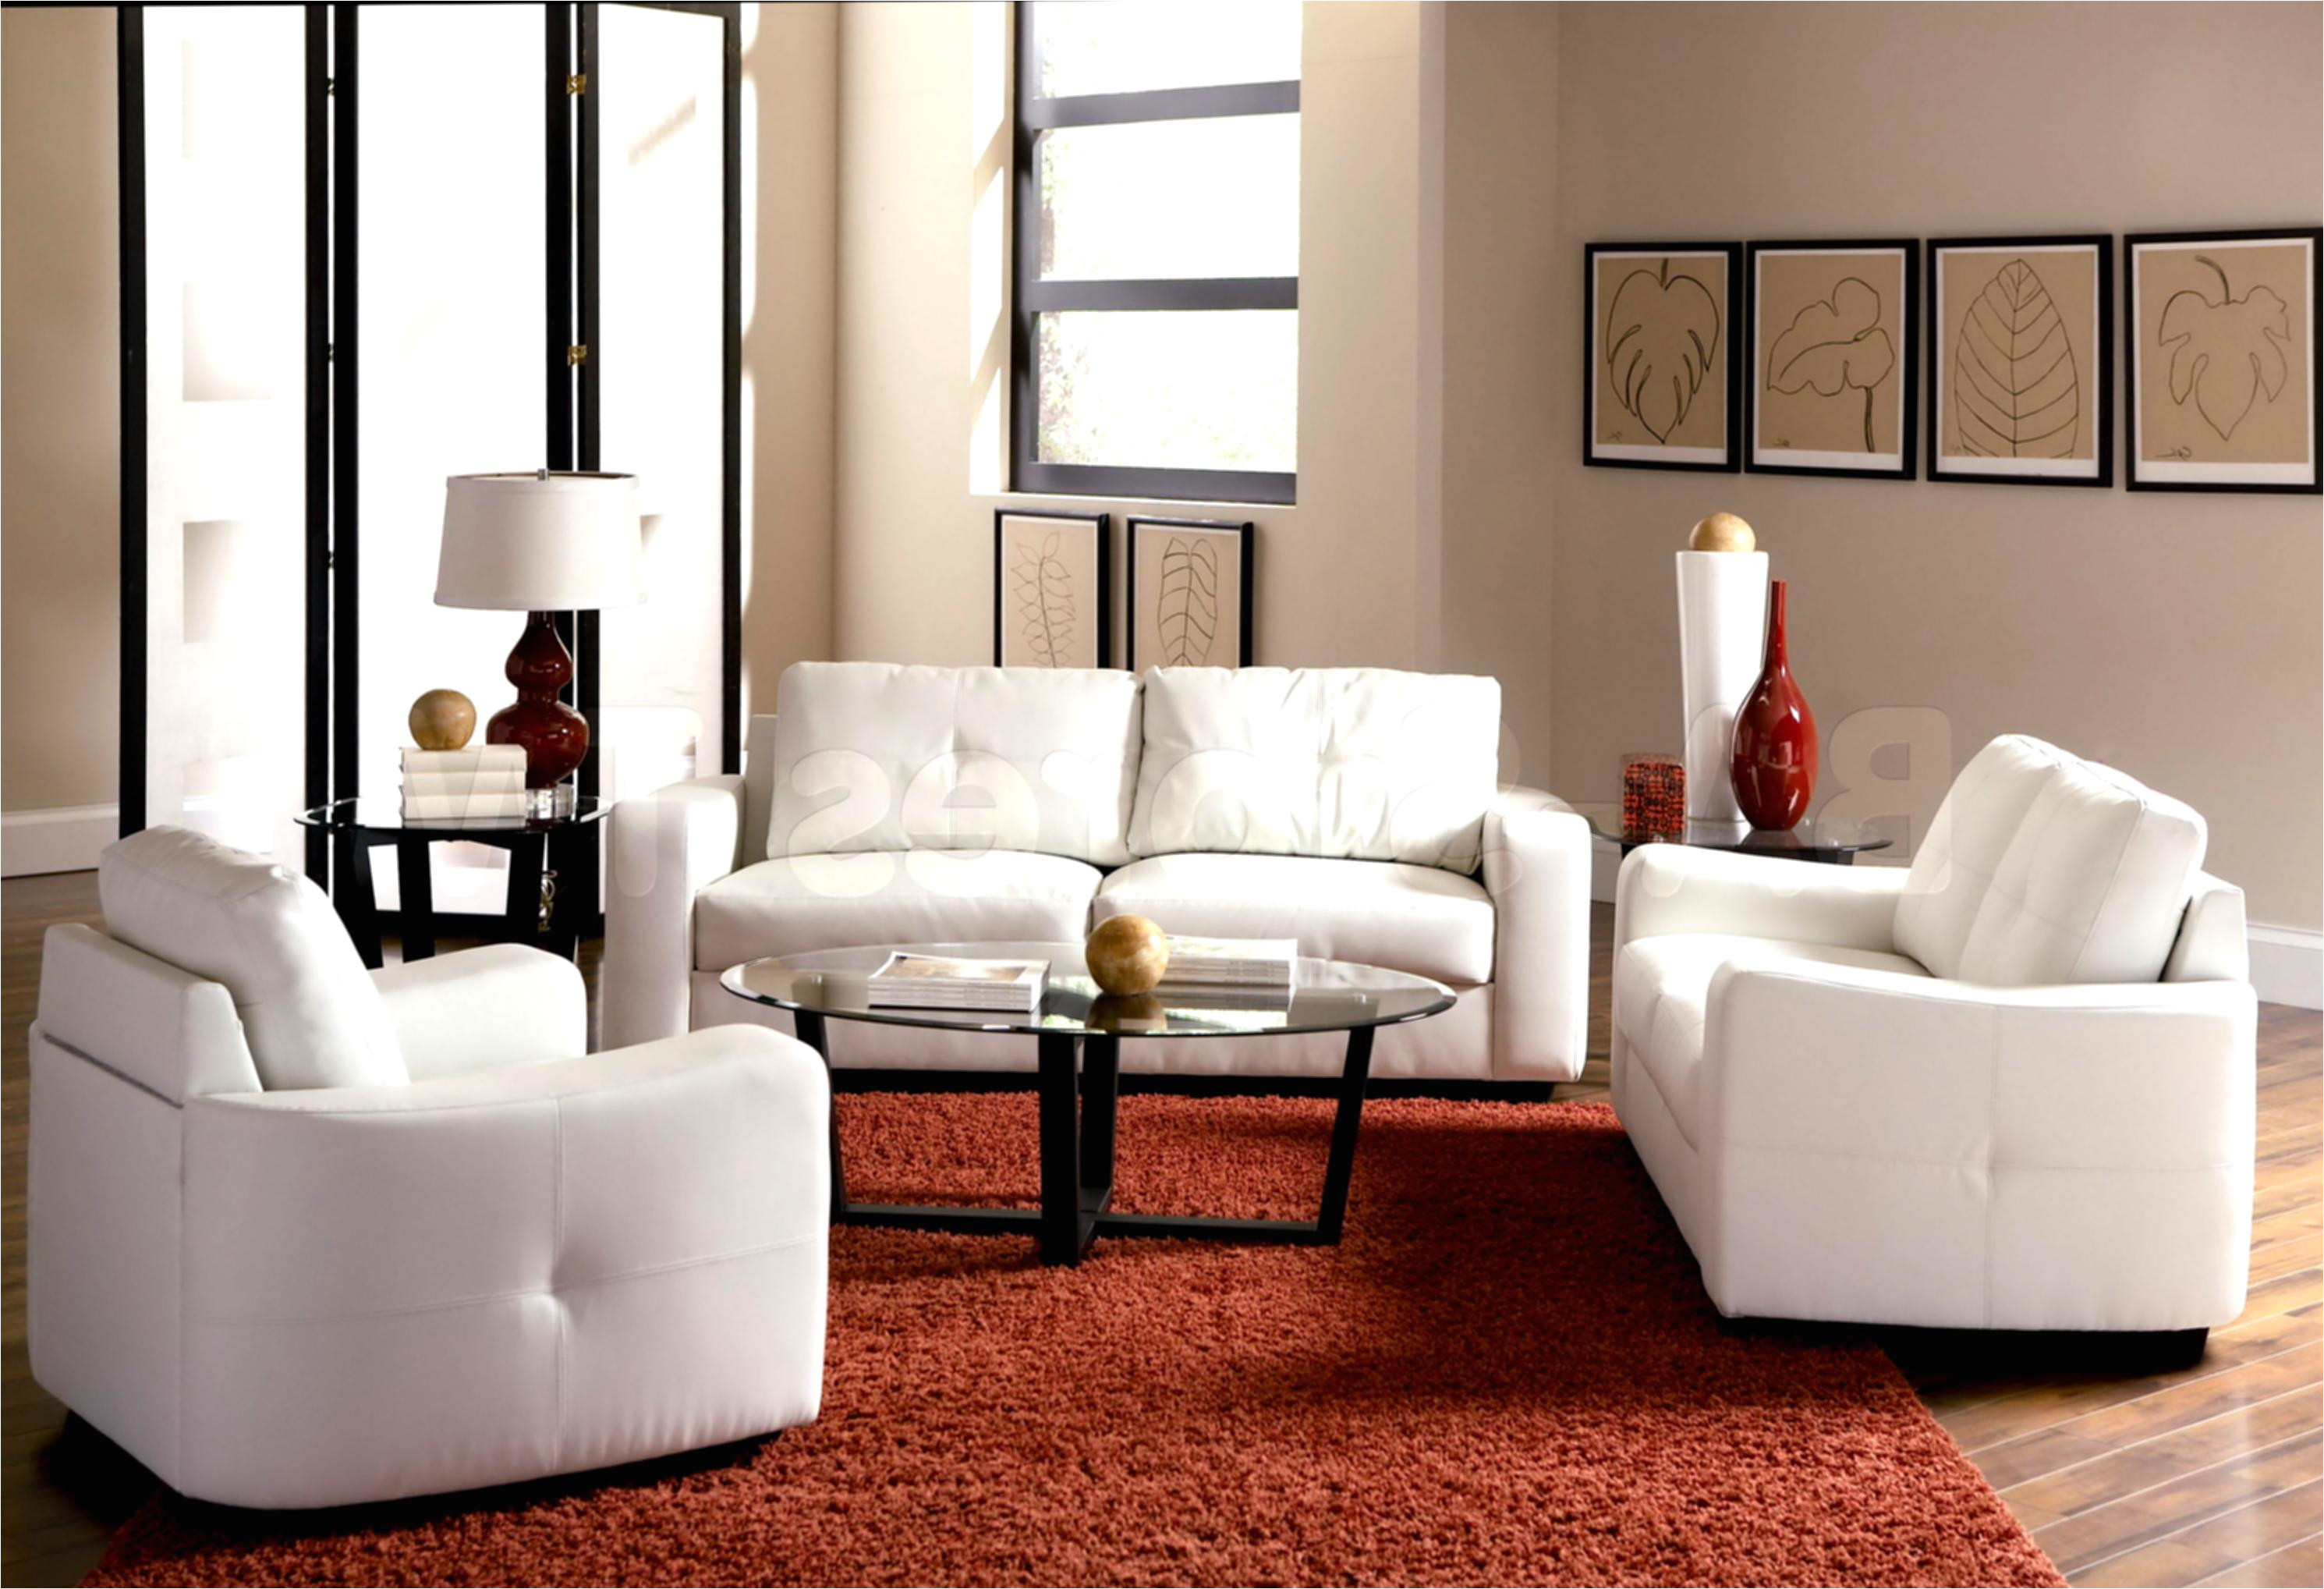 macys leather sectional sofa inspirational dazzling modern living room sofa ideas 33 24 unique decor furniture